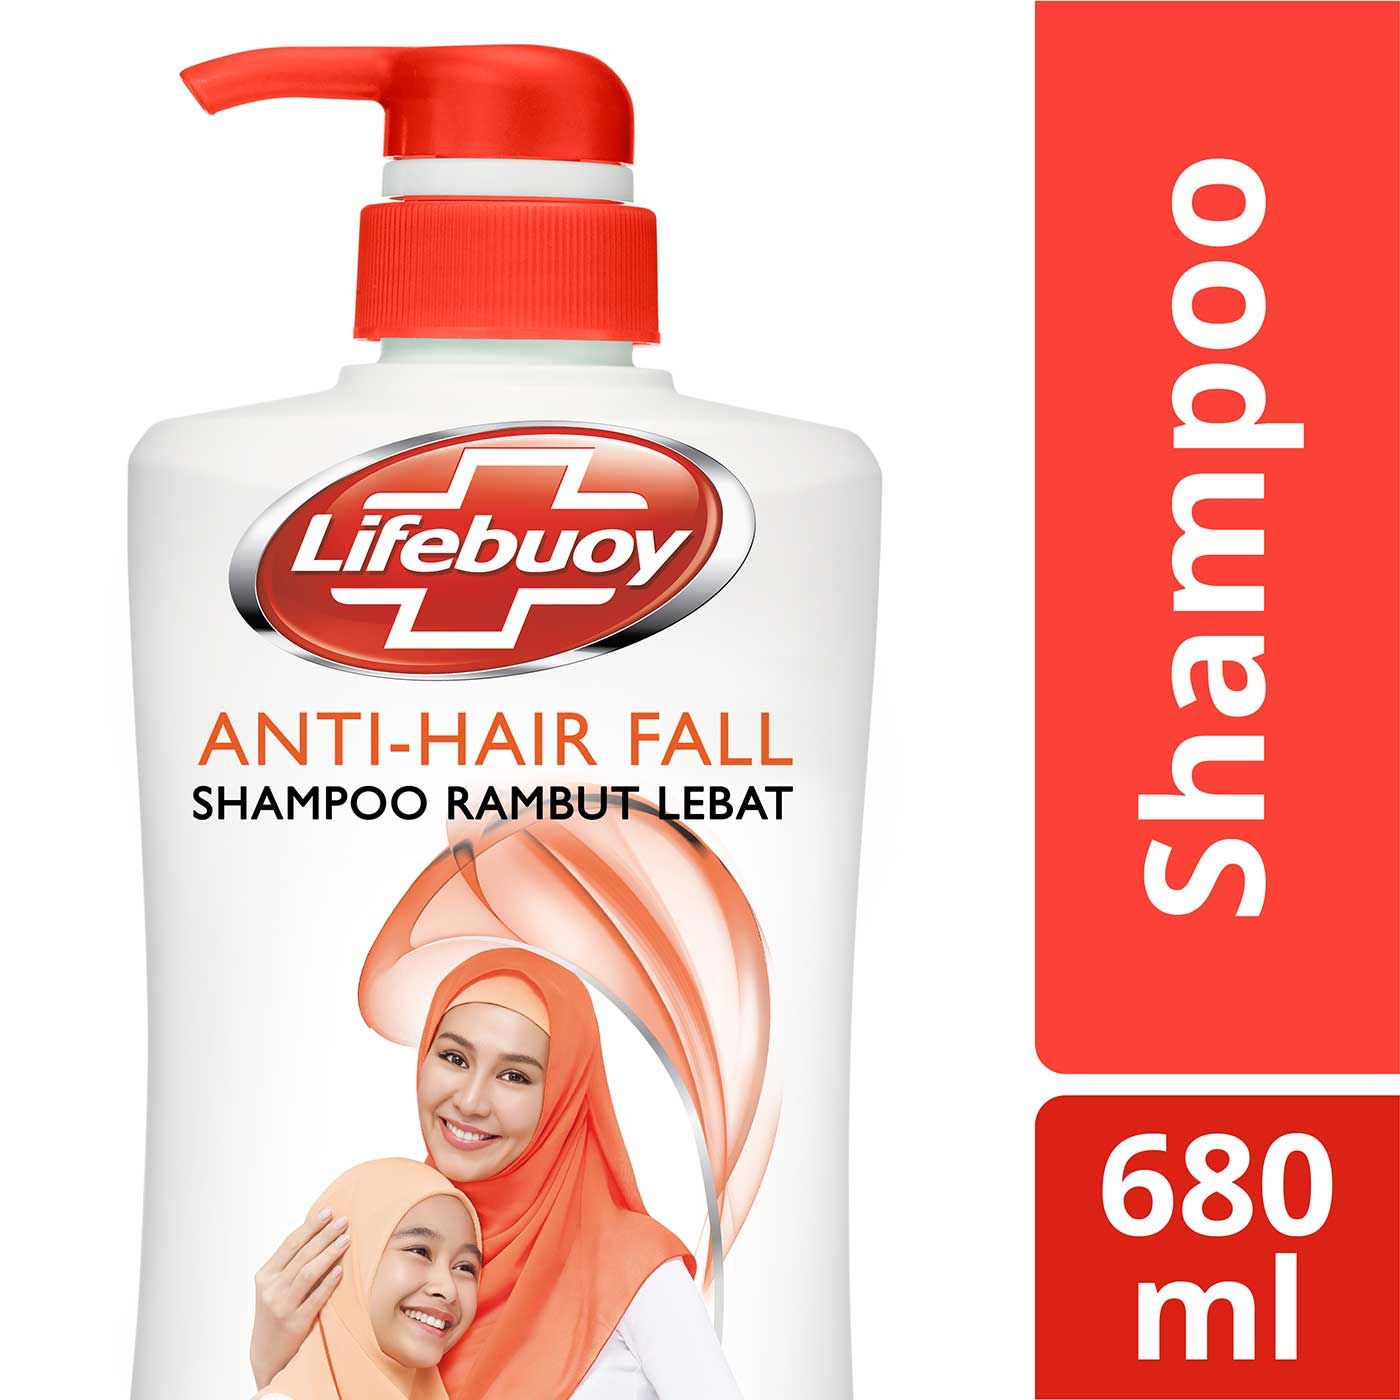 Lifebuoy Shampoo Anti Hairfall Fx 680ml - 2